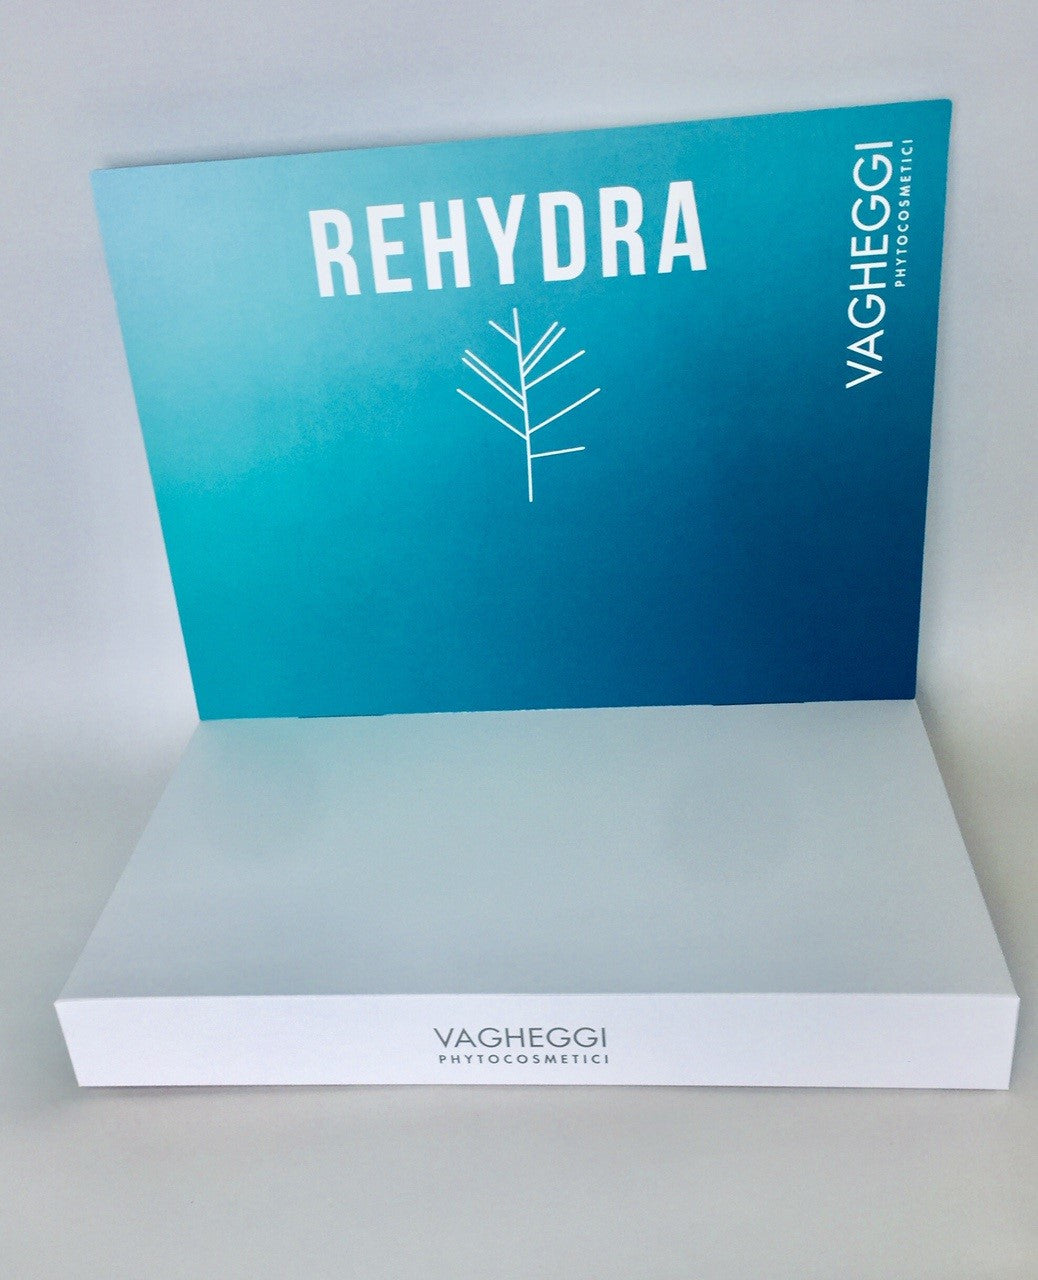 Rehydra Counter Display - Professional Salon Brands